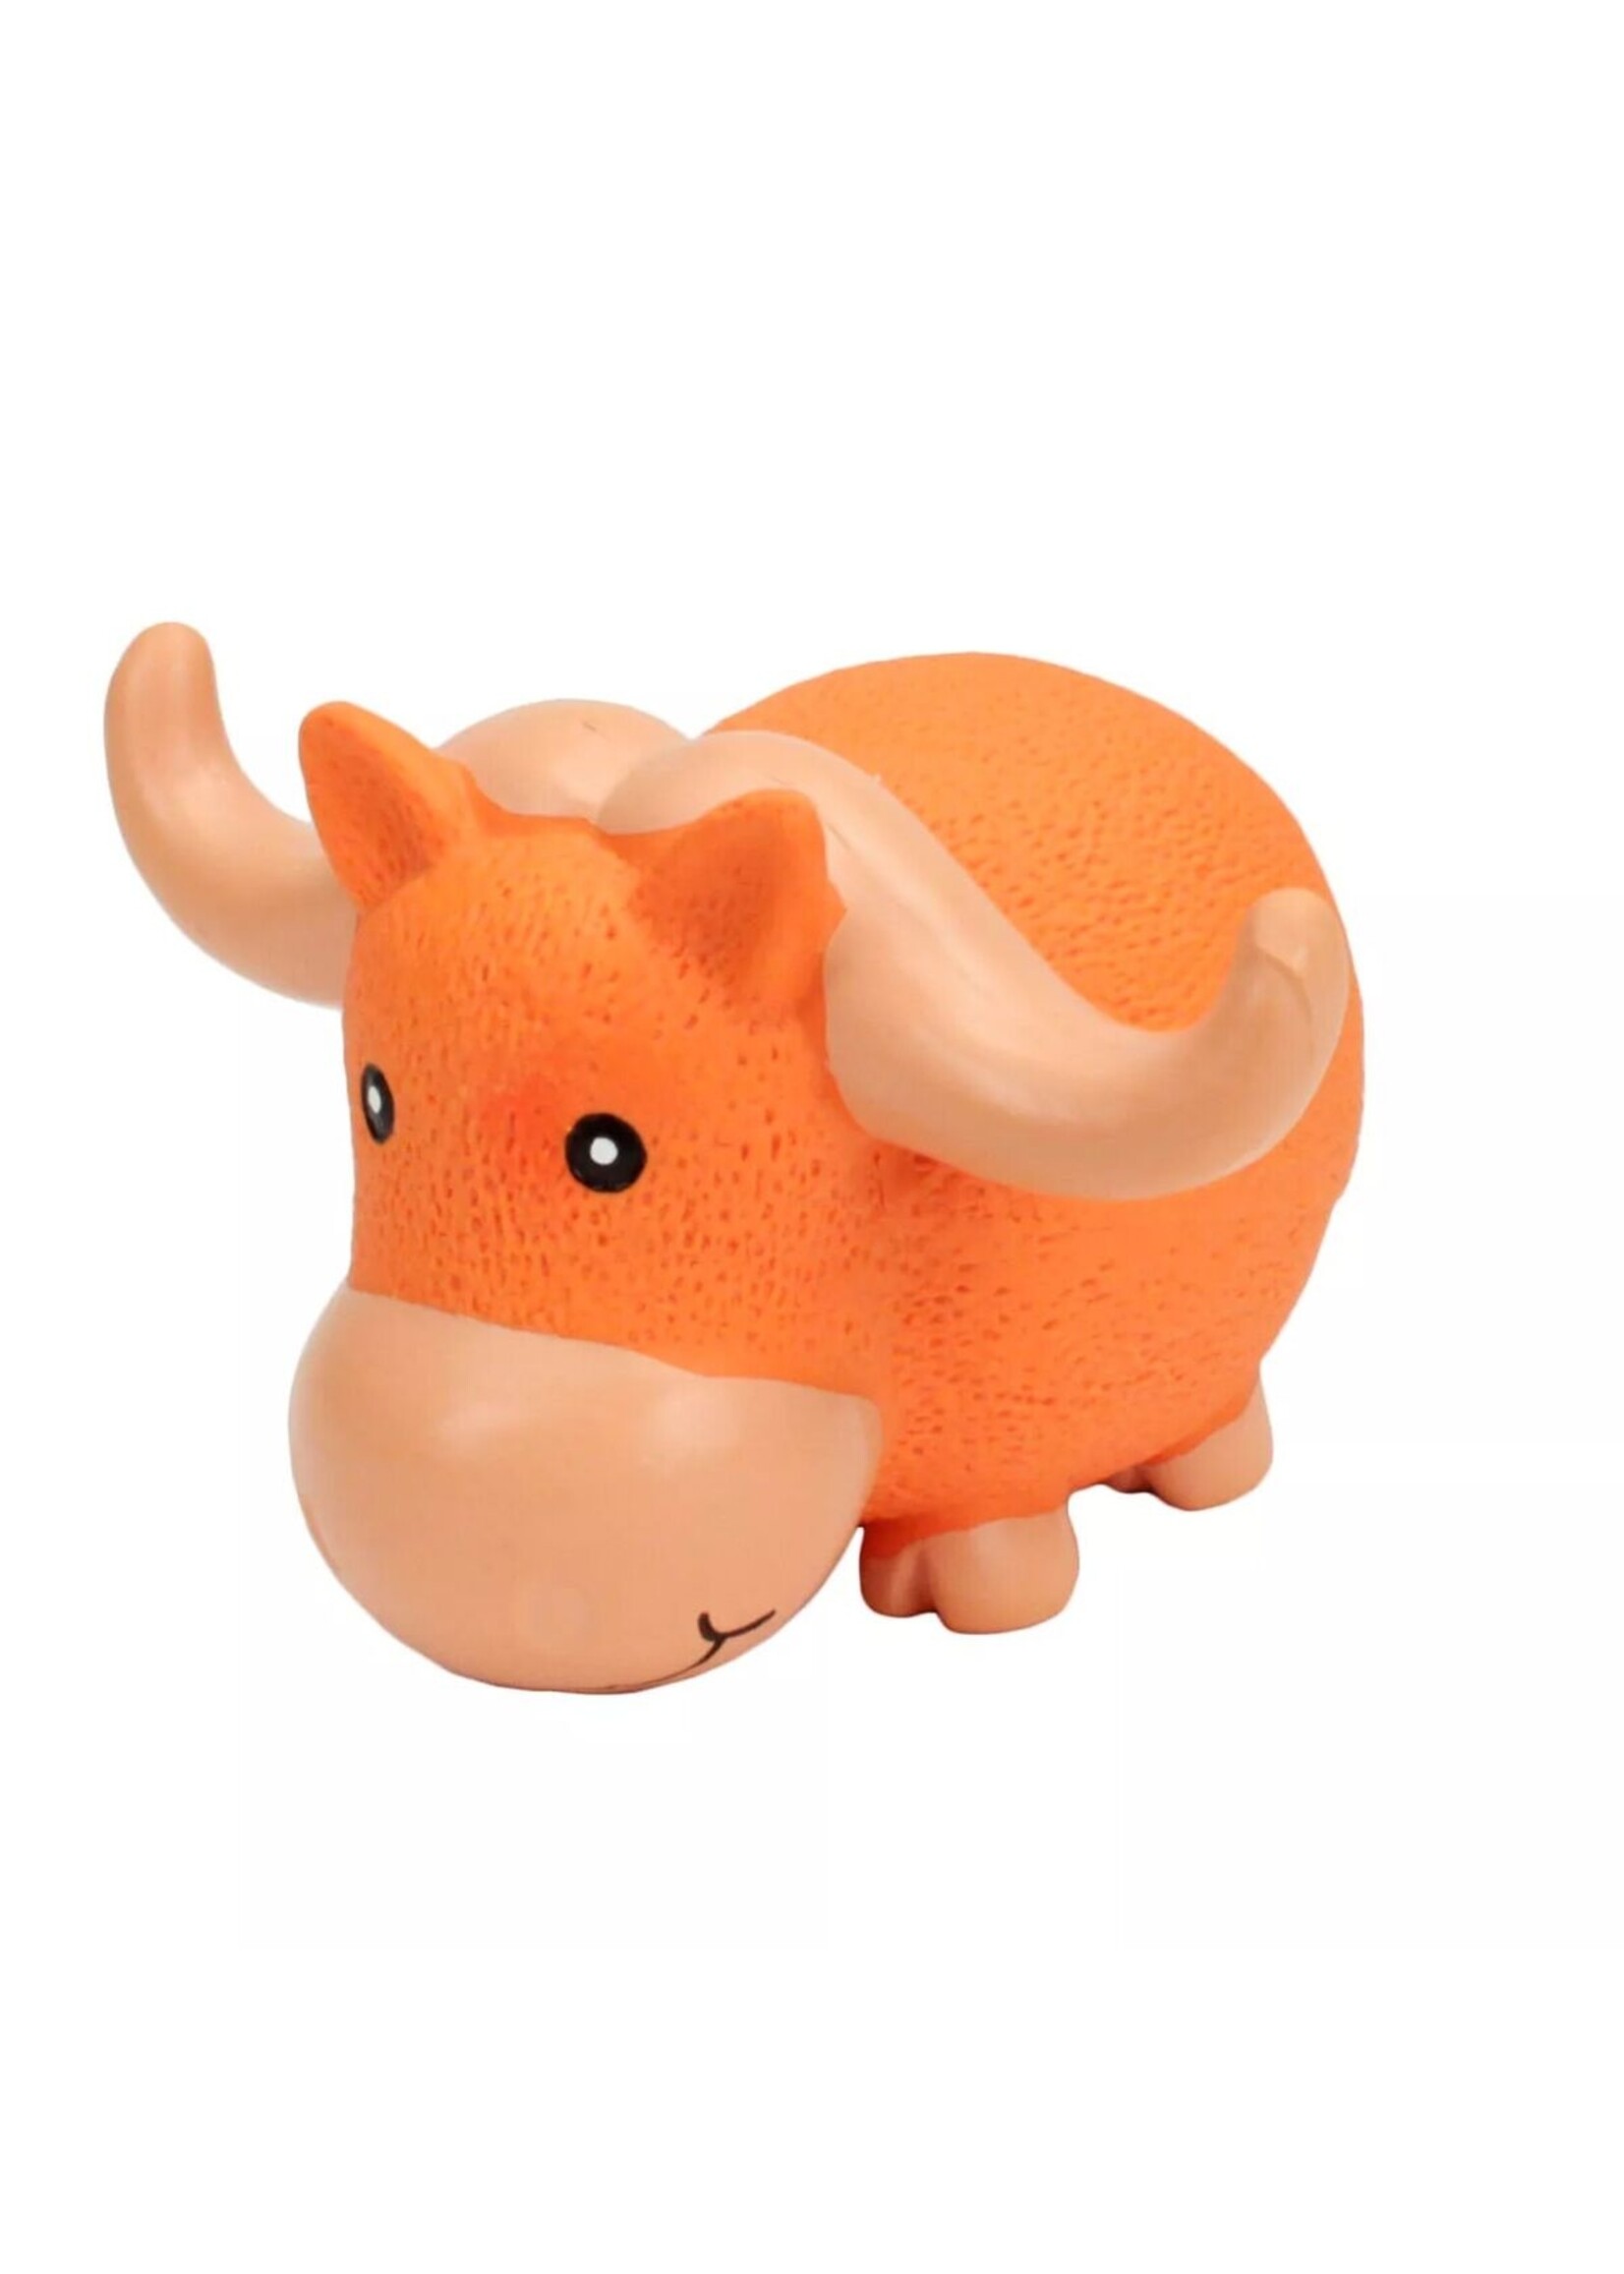 Coastal Pet Products Inc. Rascals Grunt Toy Big Horn Bull 6.5"